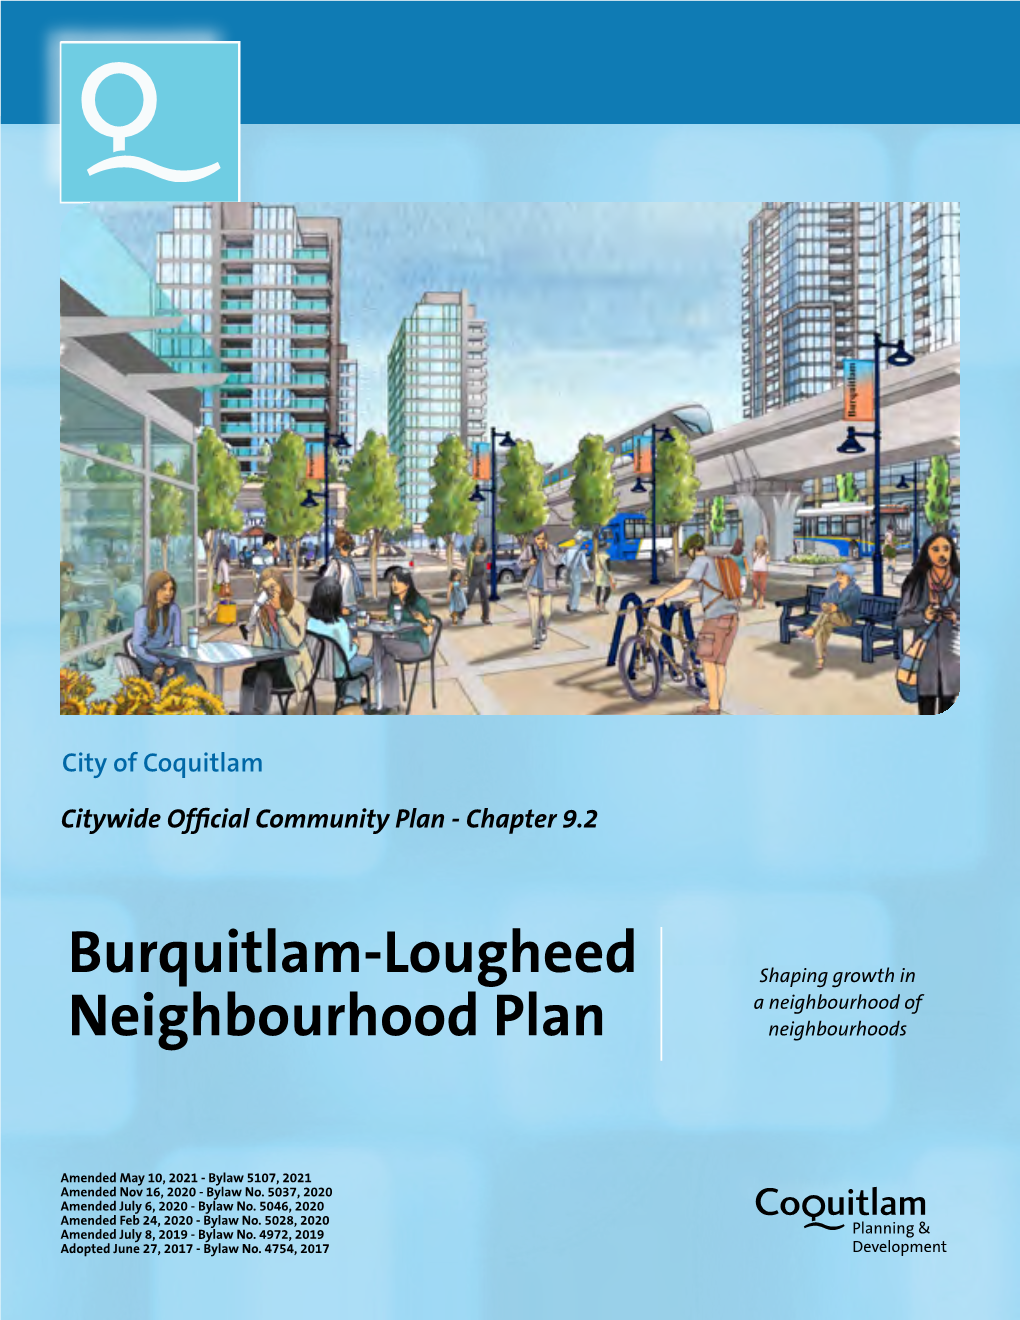 Burquitlam Lougheed Neighbourhood Plan (PDF)